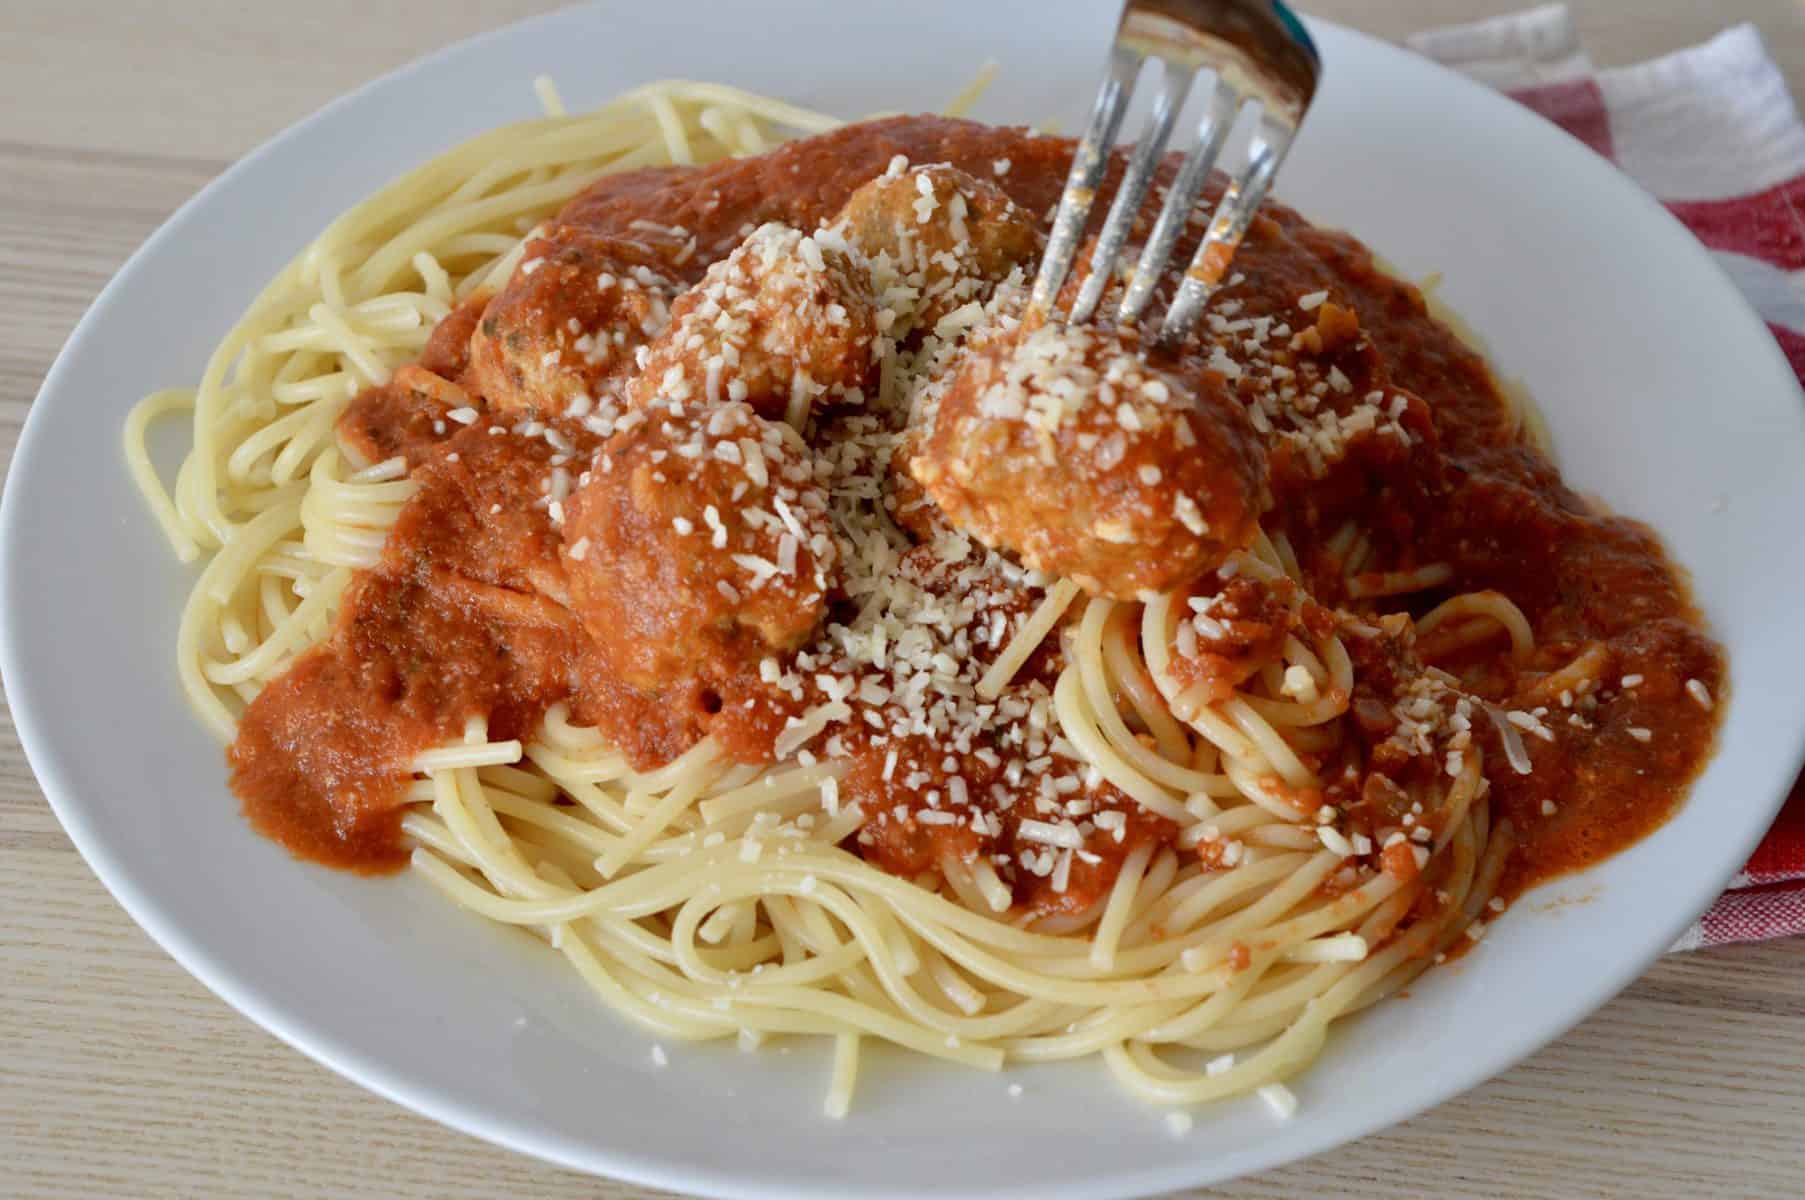 Italian Turkey Sausage Meatballs in marinara sauce over spaghetti in a white plate. 